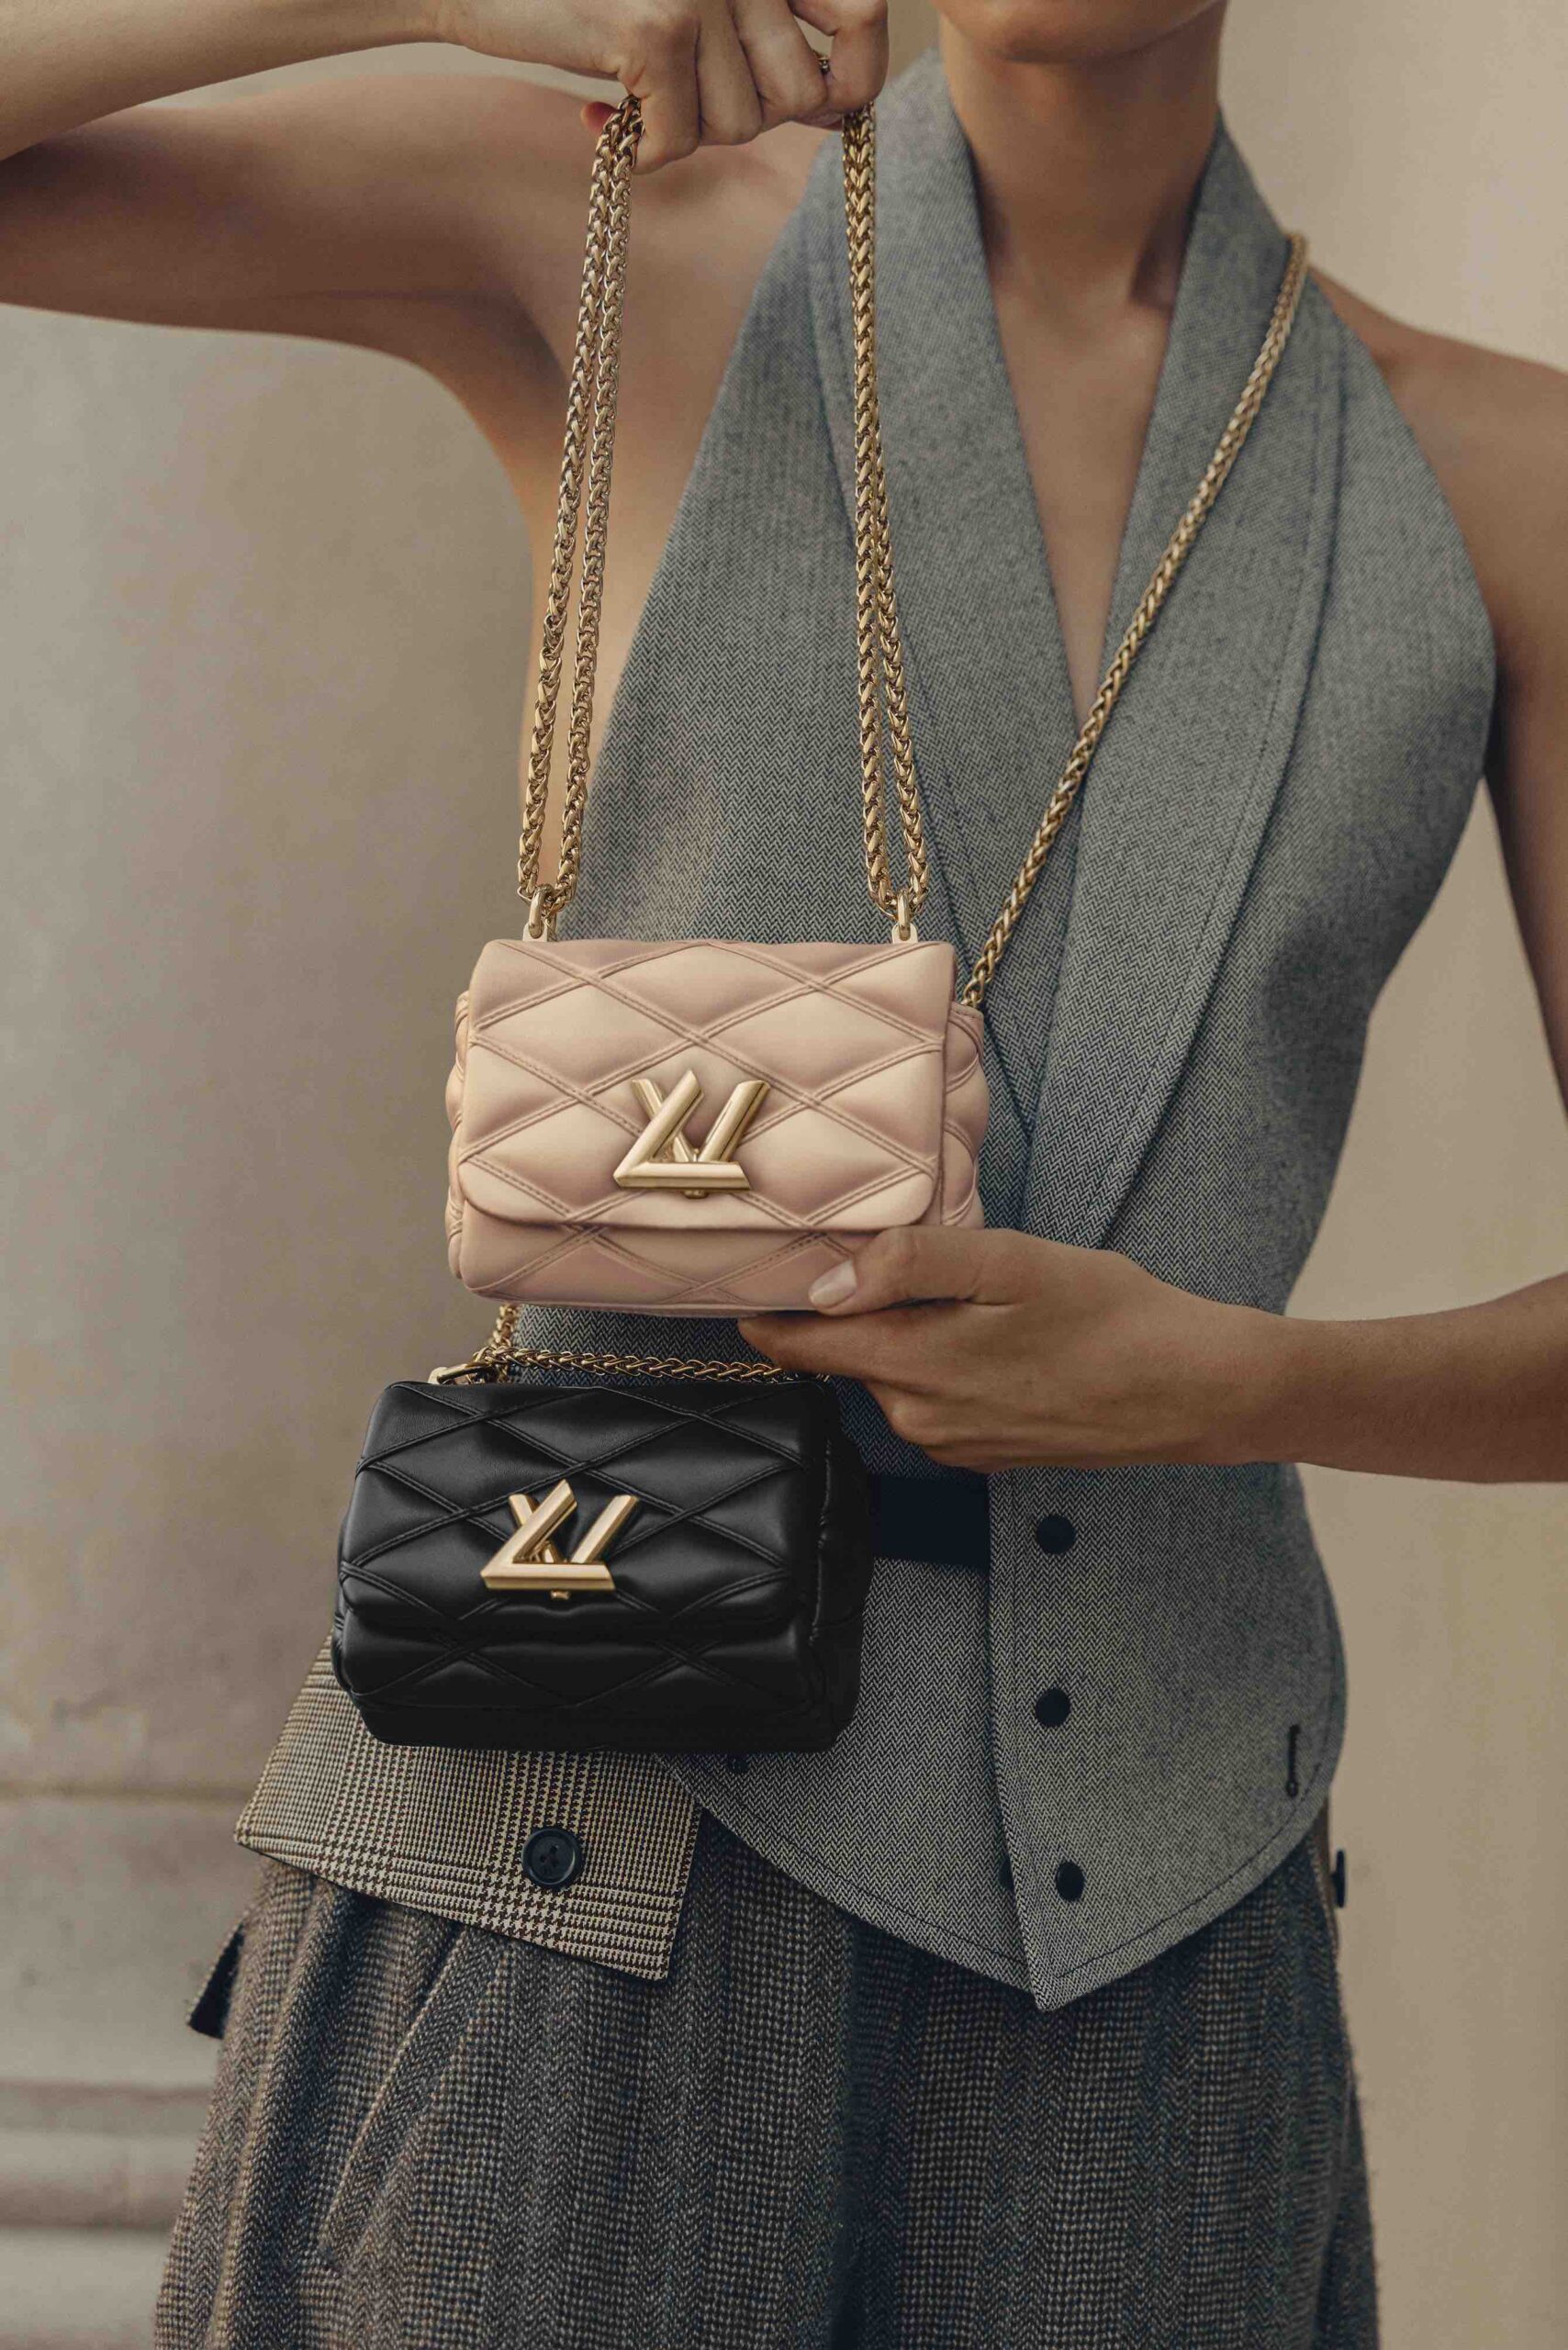 Louis Vuitton: A Debut With Desire